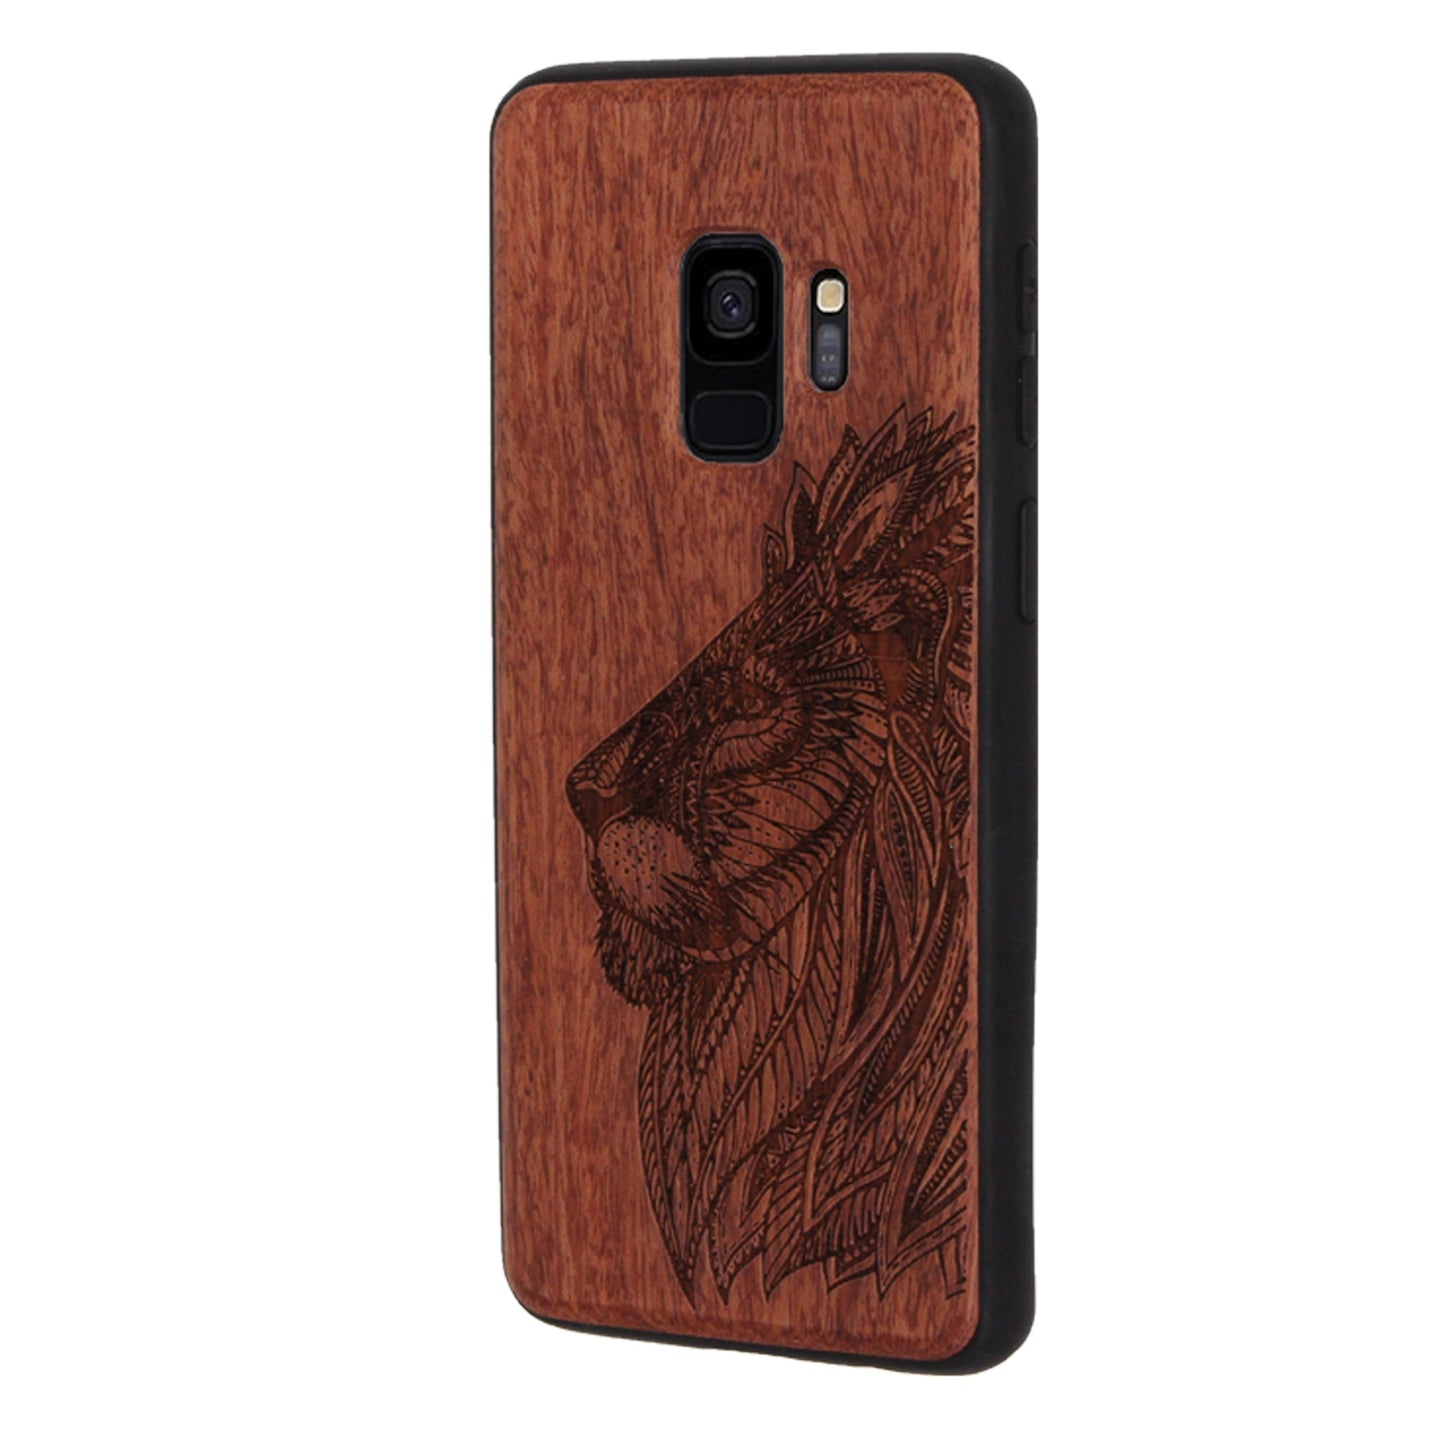 Rosewood Lion Eden Case for Samsung Galaxy S9